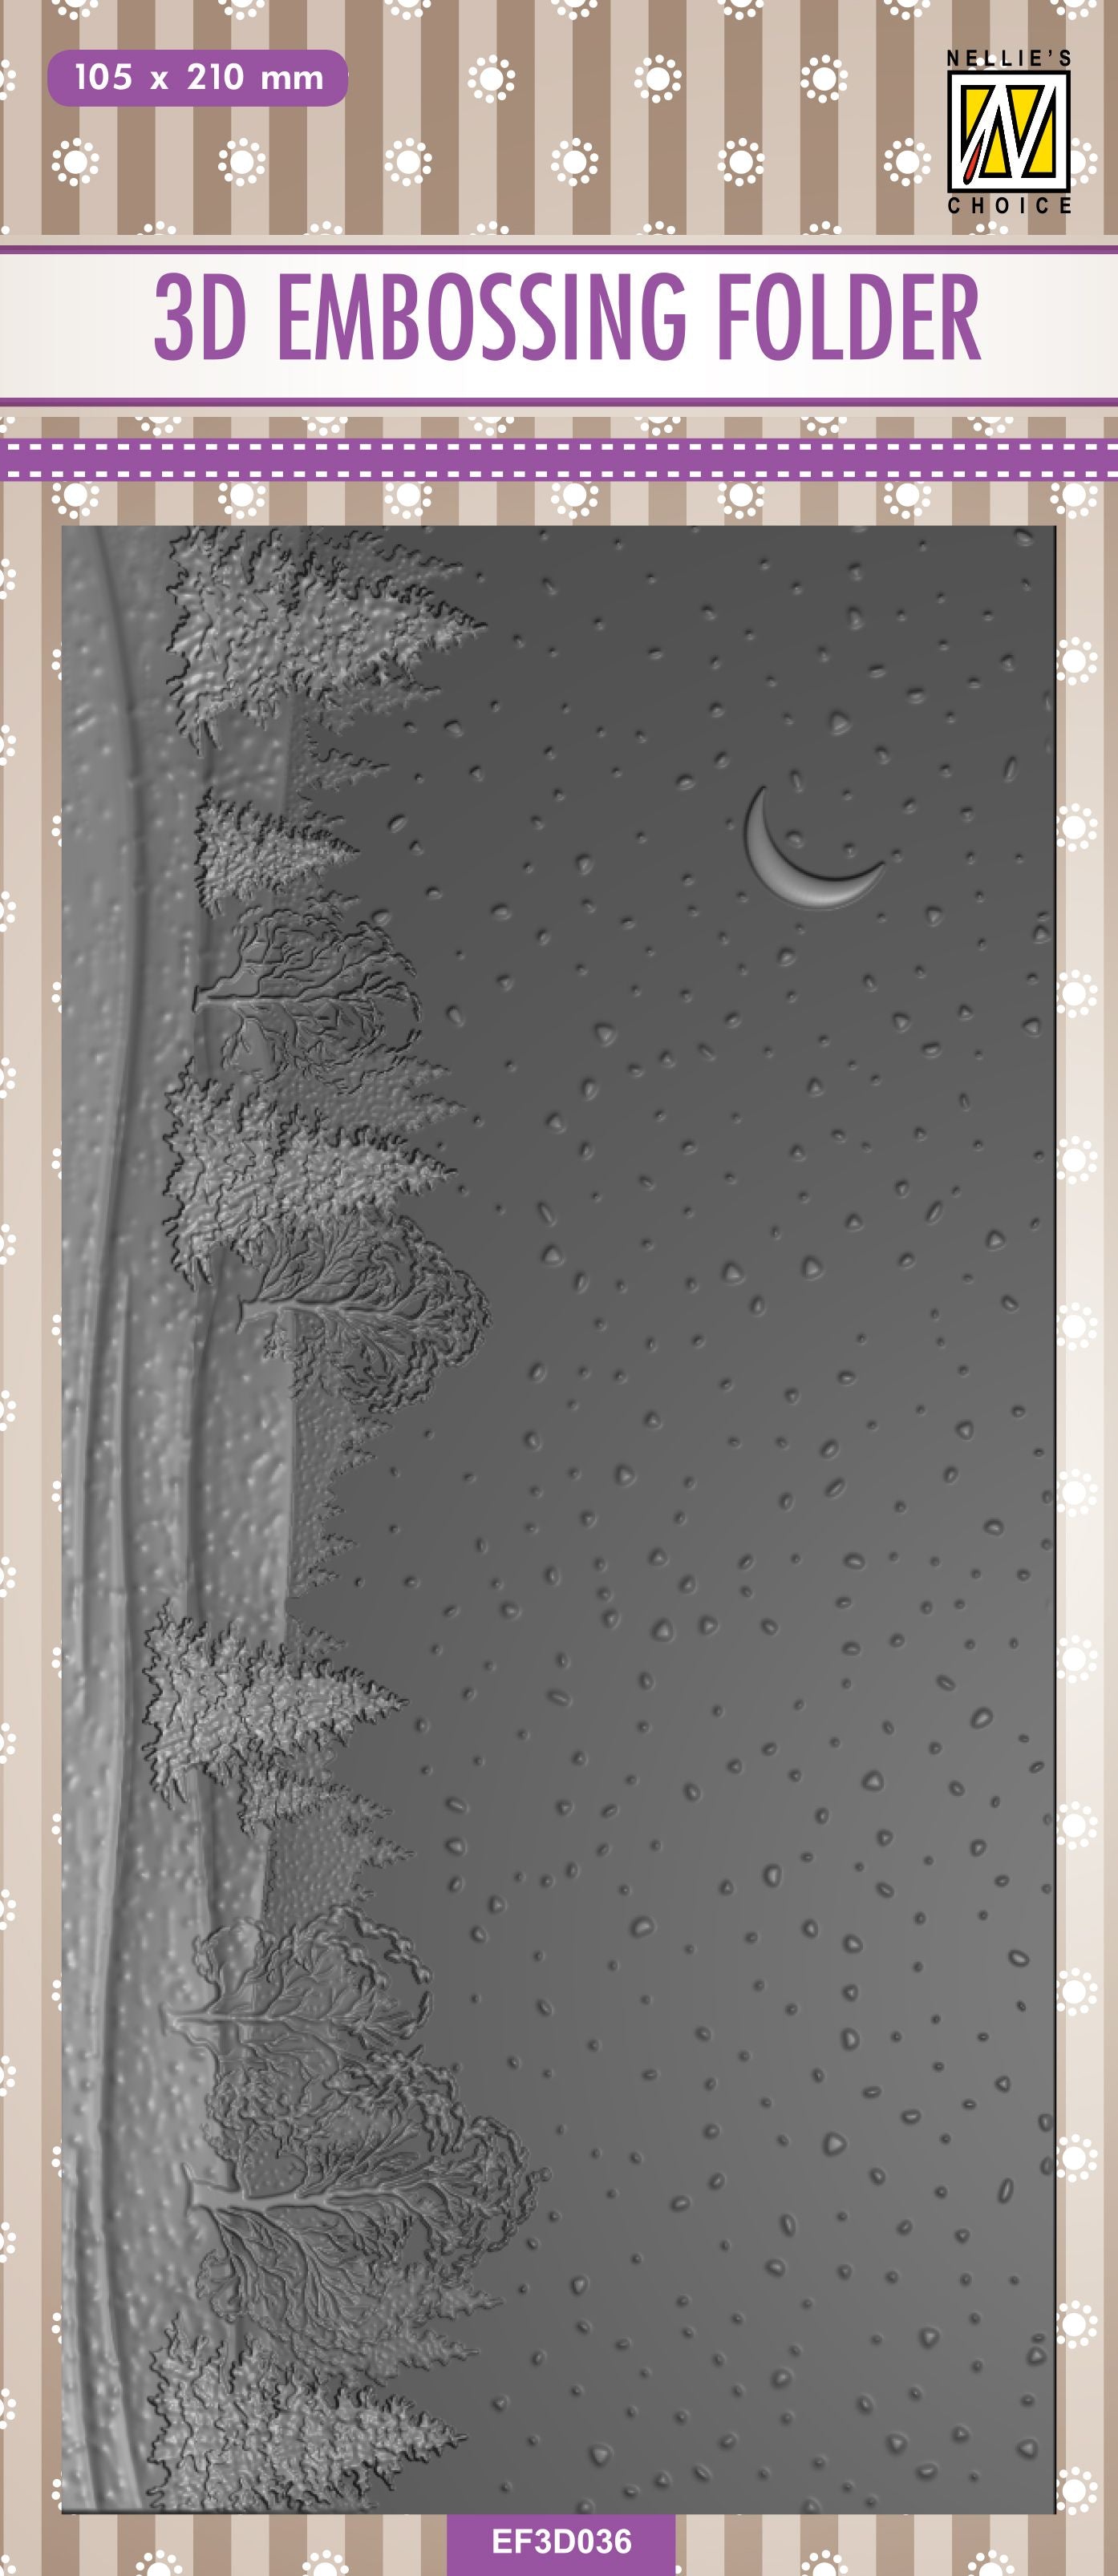 Nellie's Choice 3D Embossing Folder Slimline Size - Snowy Landscape